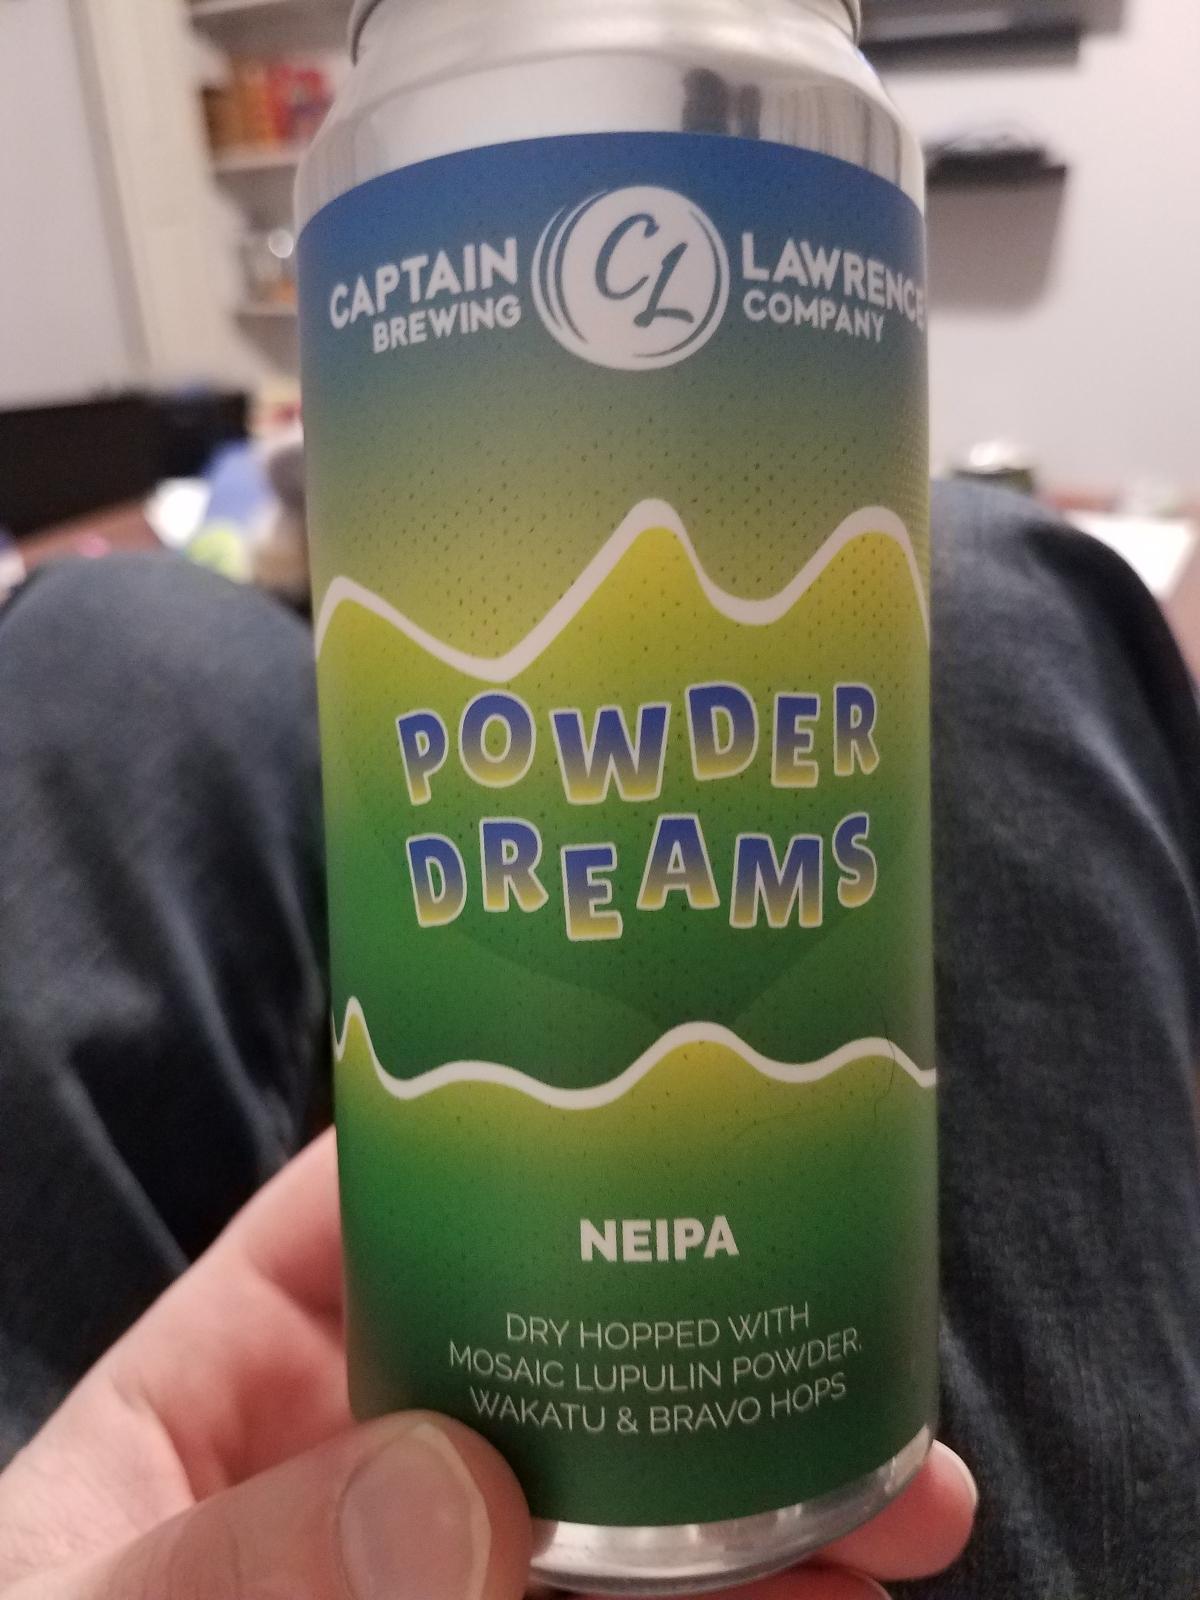 Powder Dreams - Dry Hopped W/ Mosiac Lupulin Powder, Wakatu, and Bravo Hops